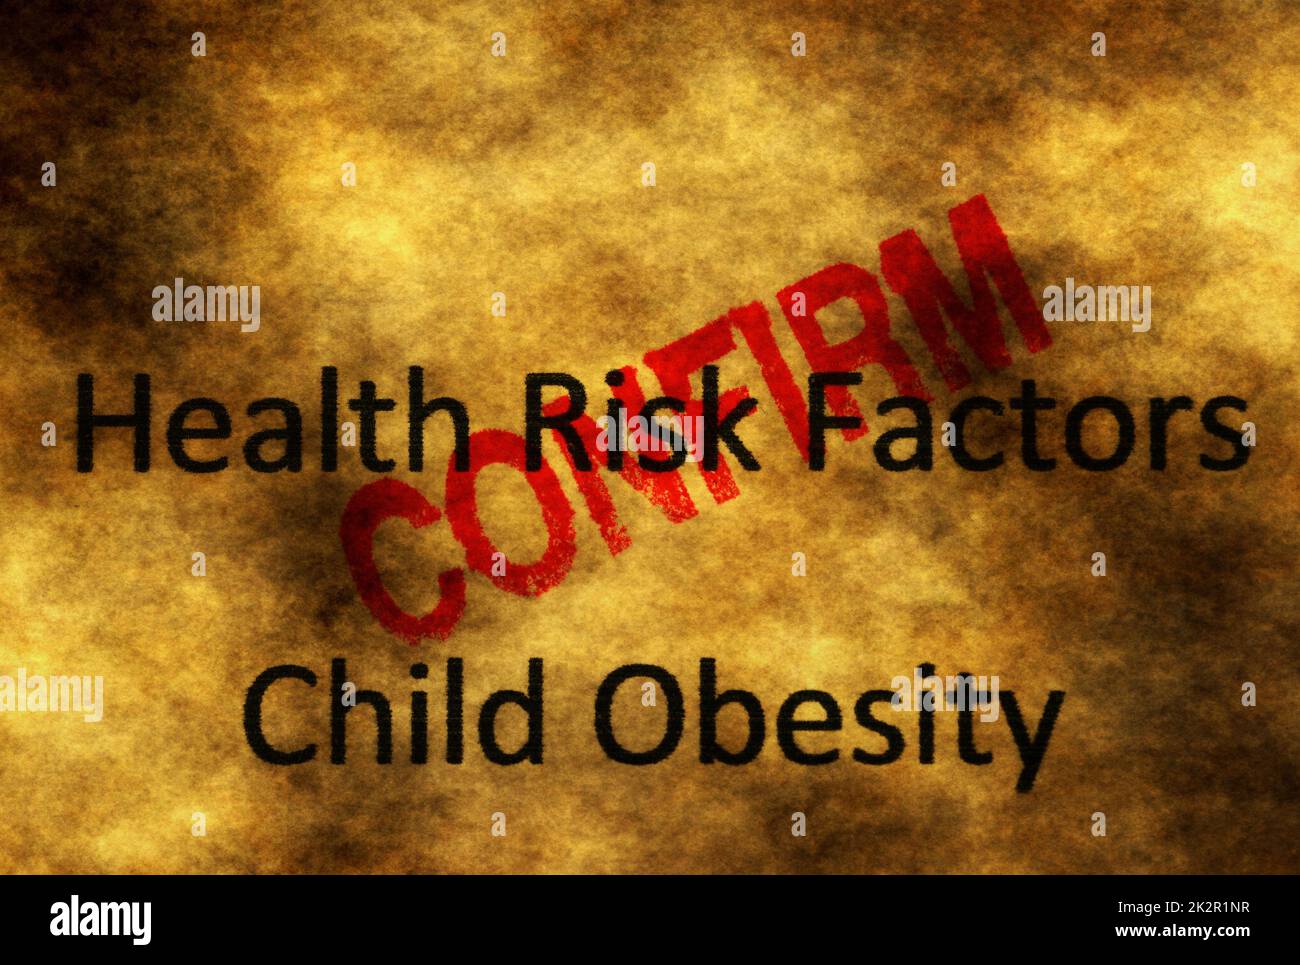 Child obesity confirm Stock Photo